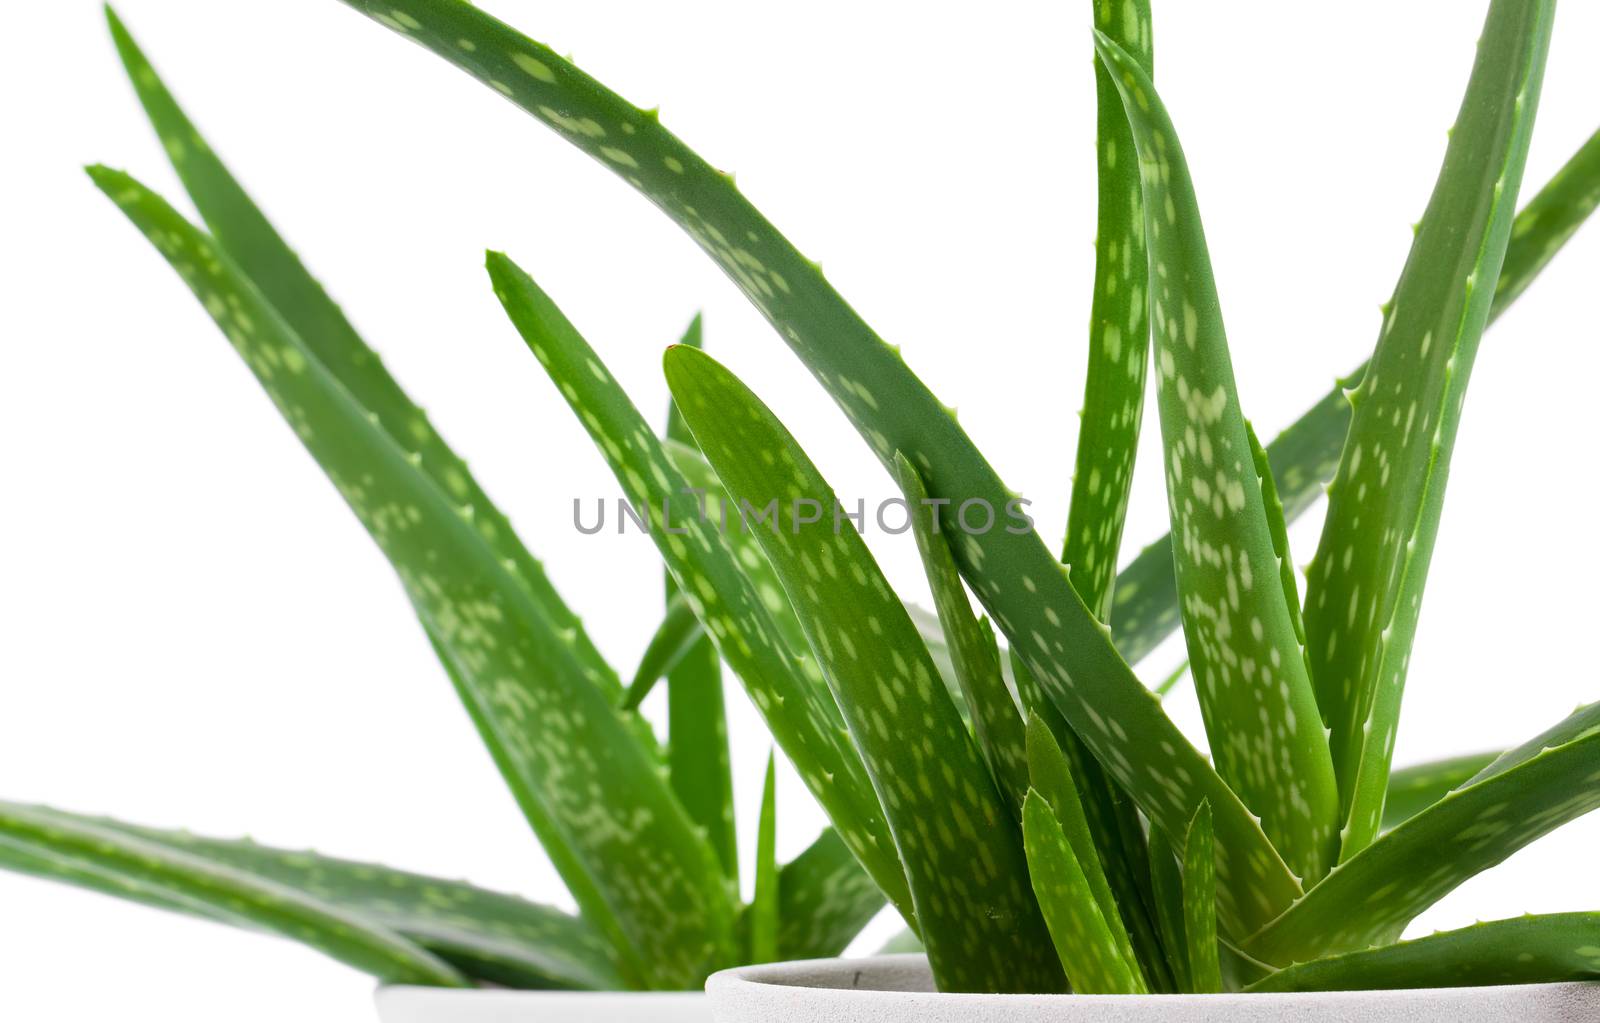 Aloe vera plant isolated on white by motorolka